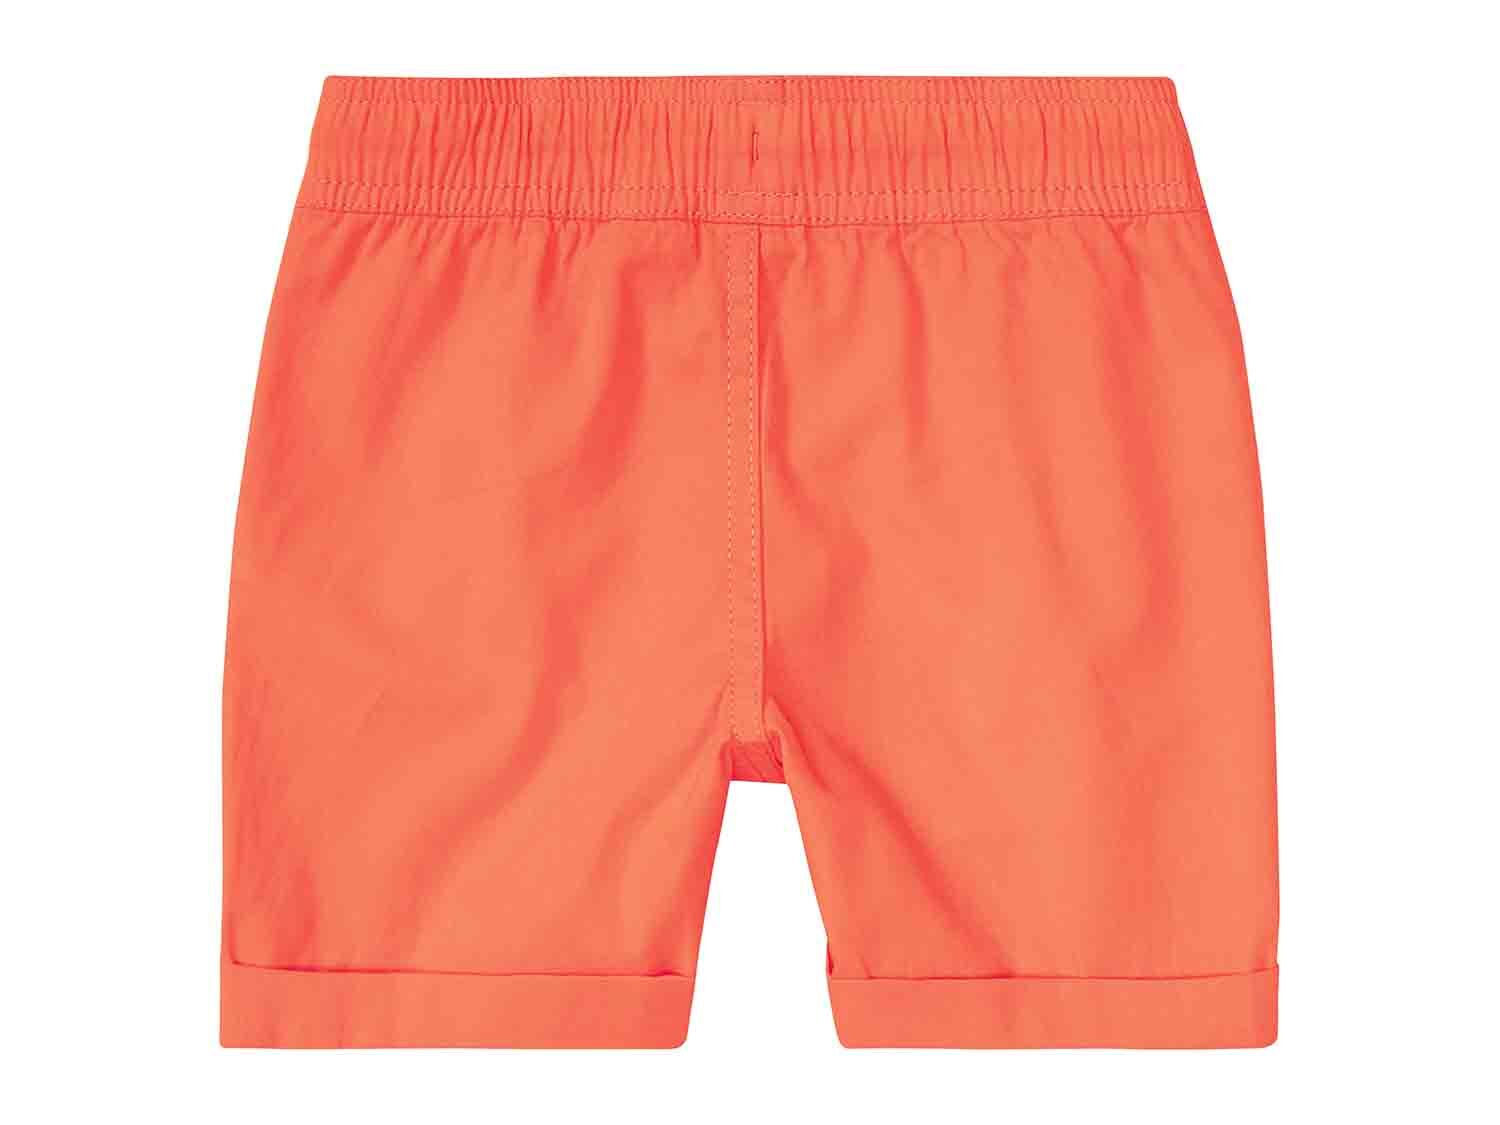 Pantalones cortos infantiles pack 2